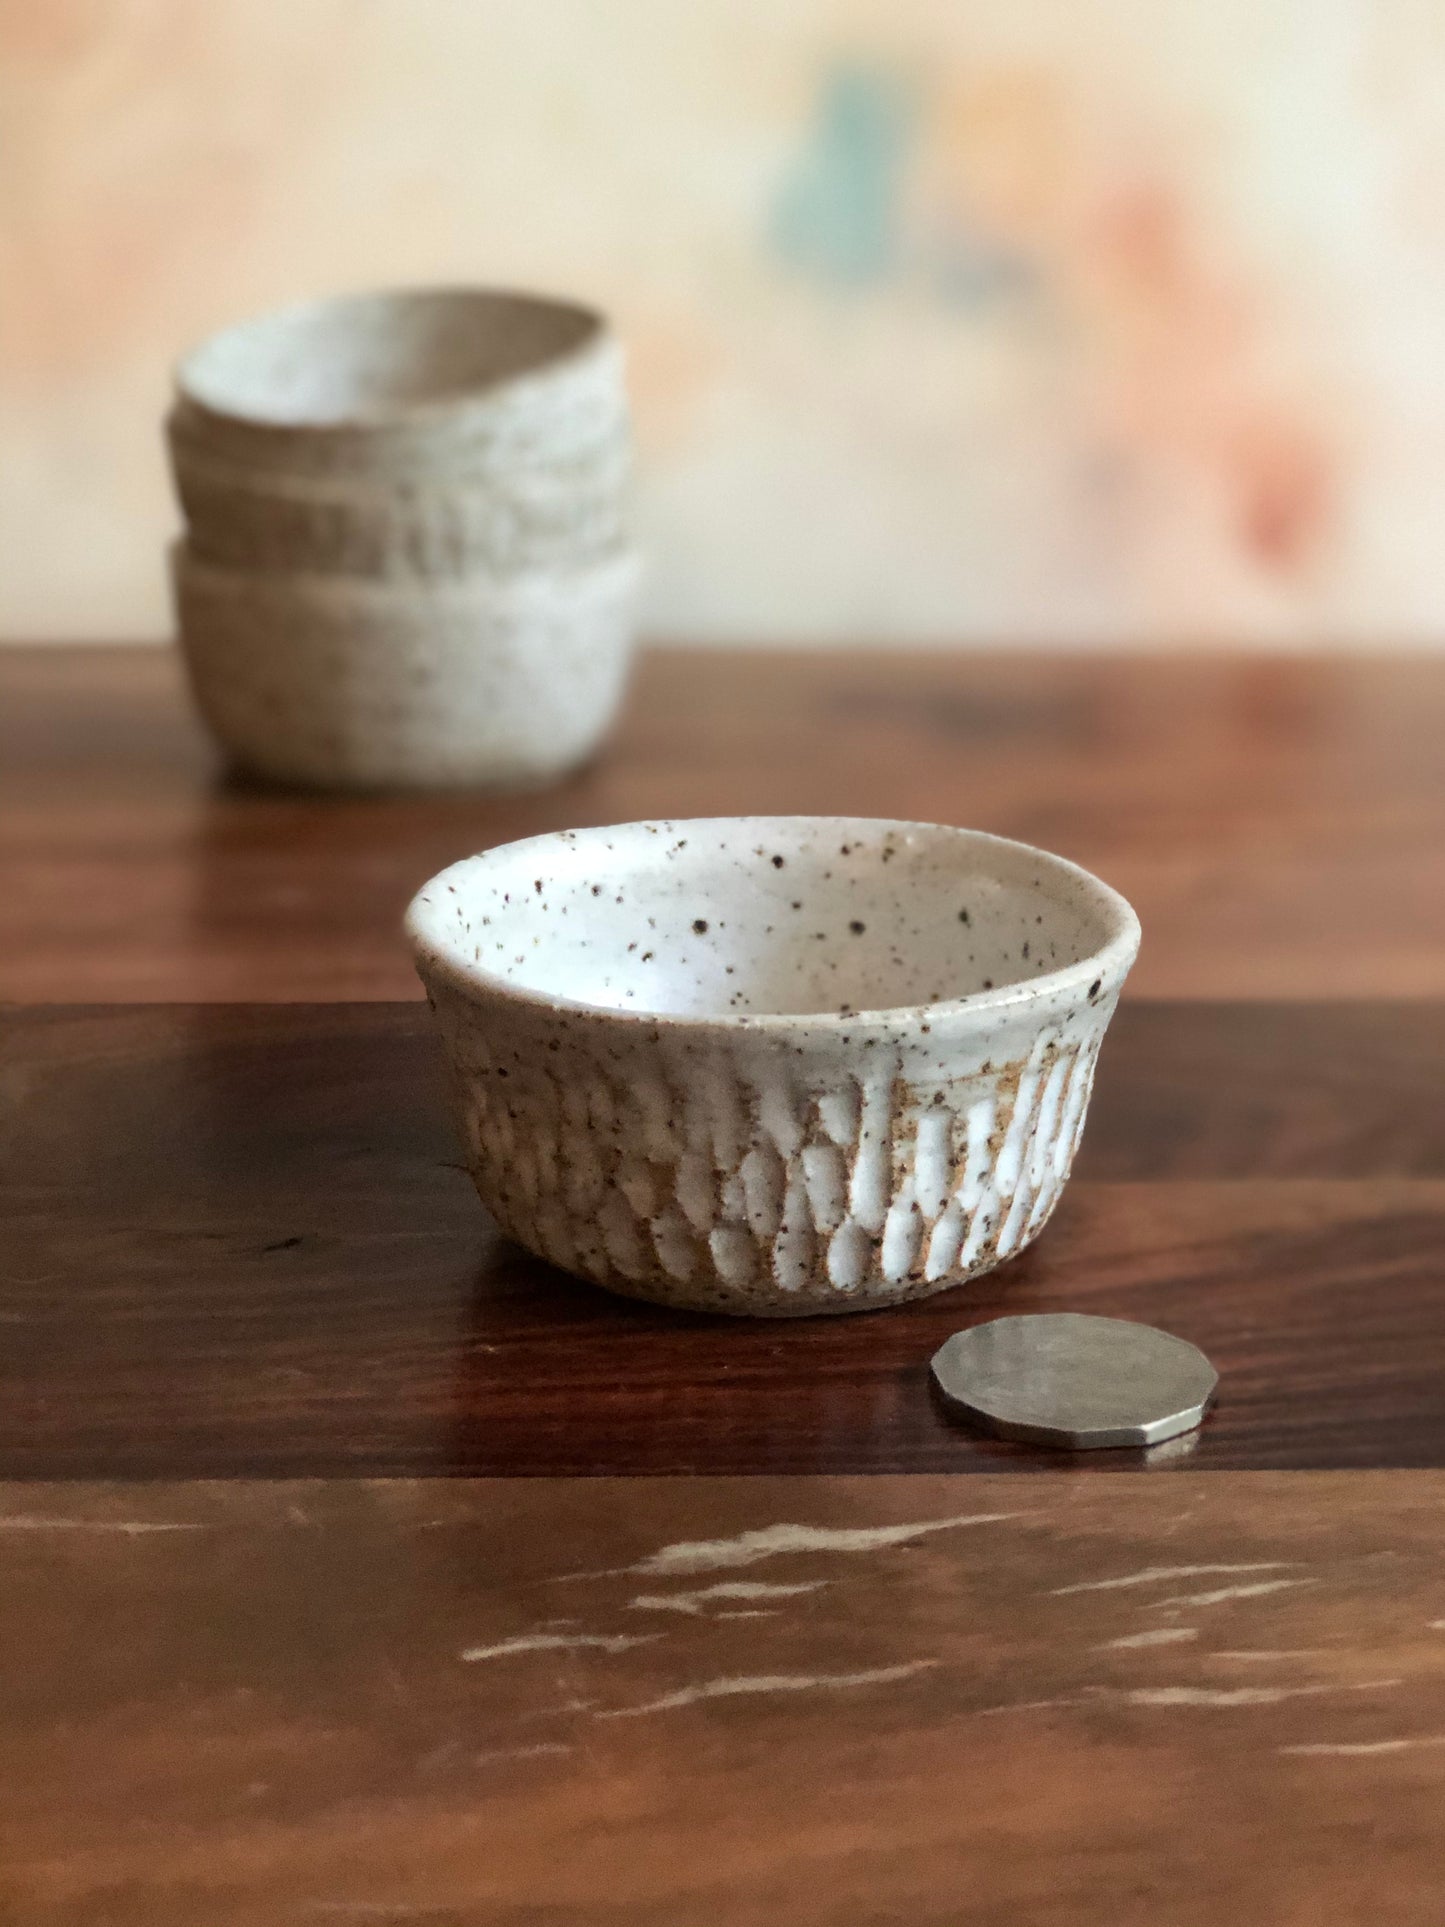 Tiny bowls or salt cellars